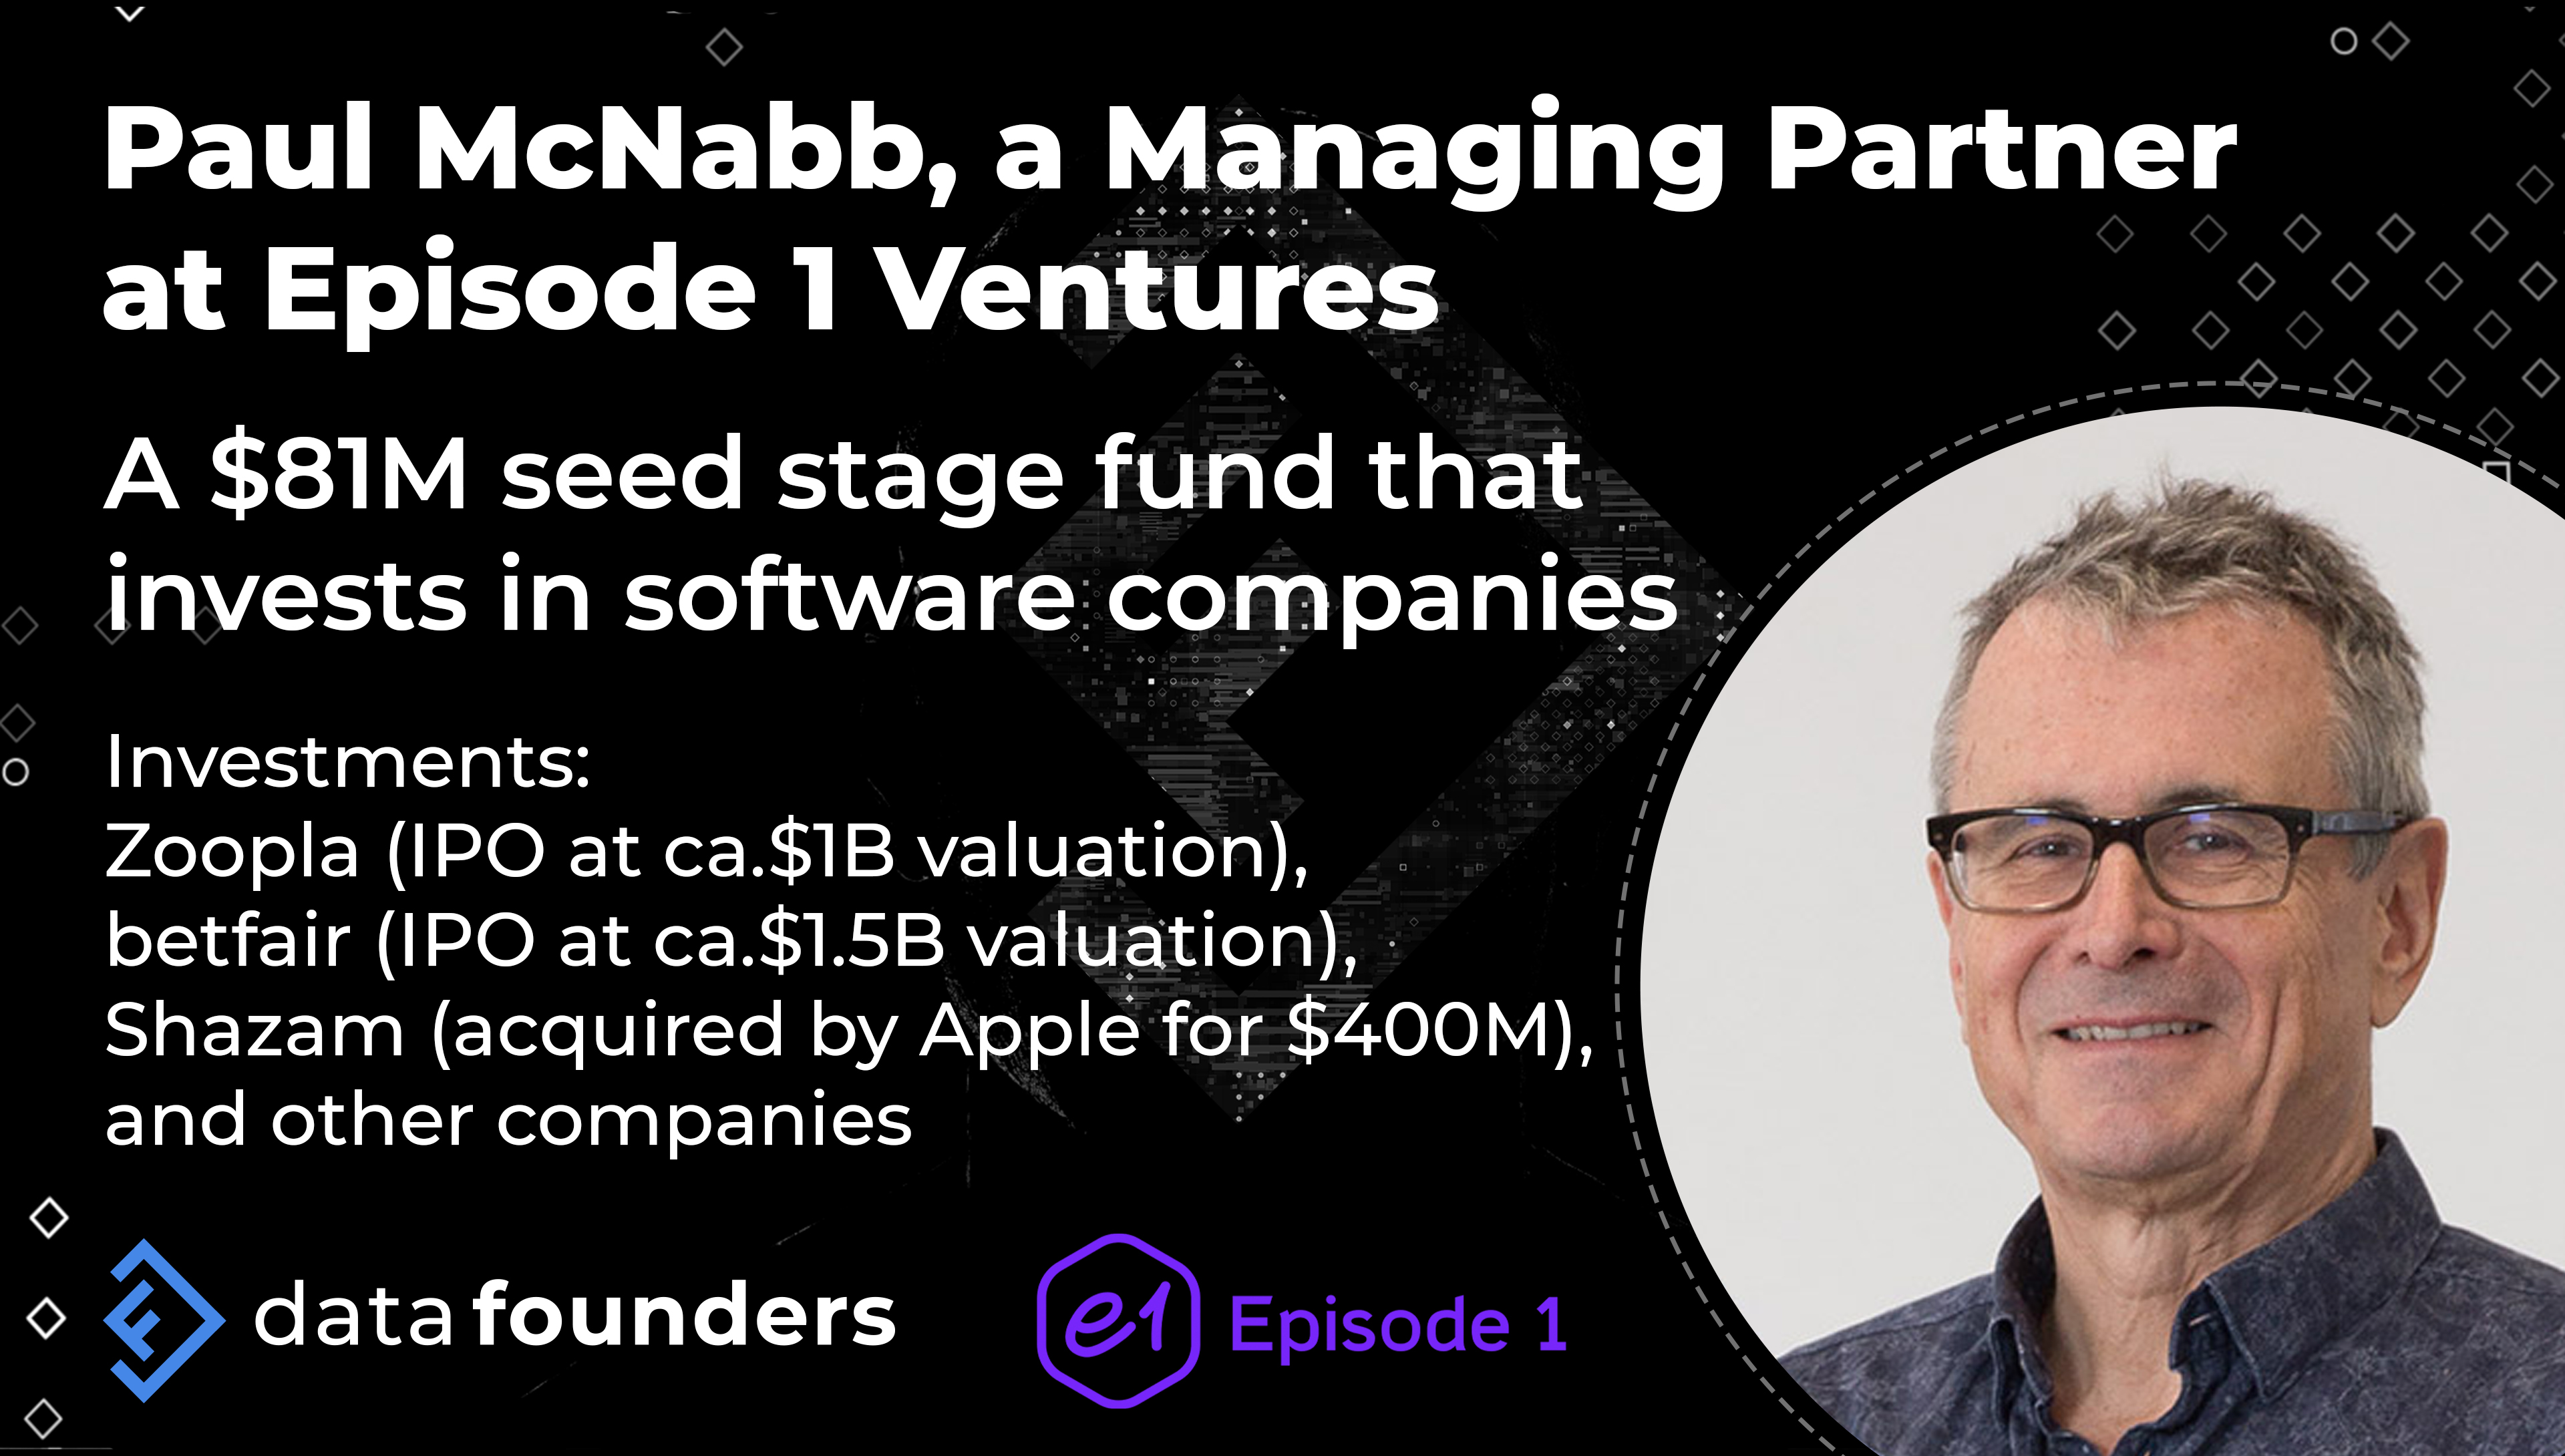 Paul McNabb, Managing Partner, Episode 1 Ventures